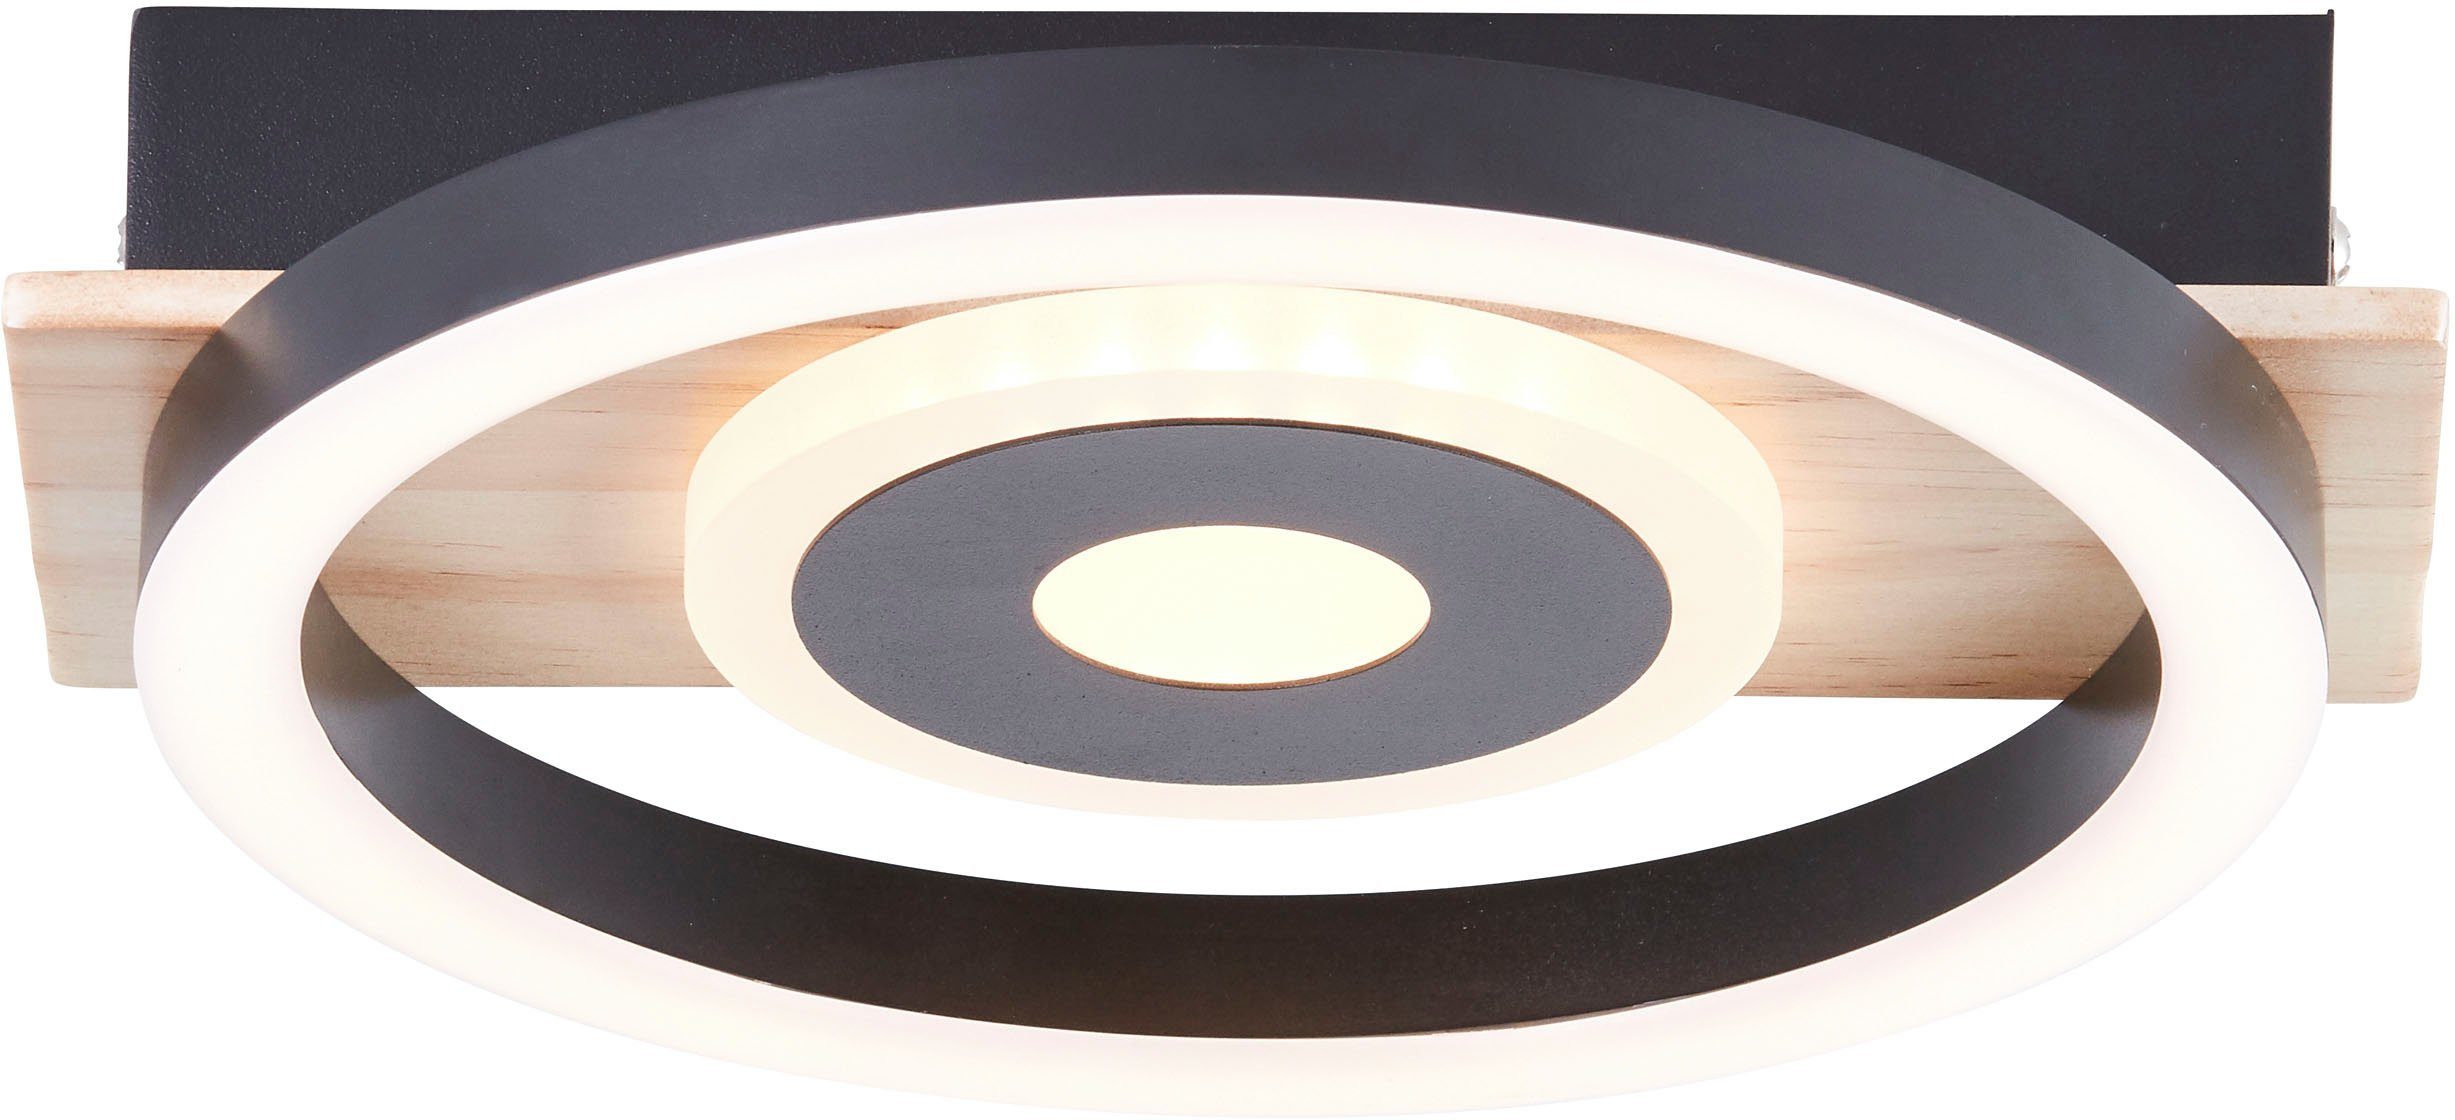 my home LED Deckenleuchte Lysann, LED fest integriert, Warmweiß, 22 x 20 cm, 12 W, 1100 lm, 3000 K, Holz/Metall, braun/schwarz